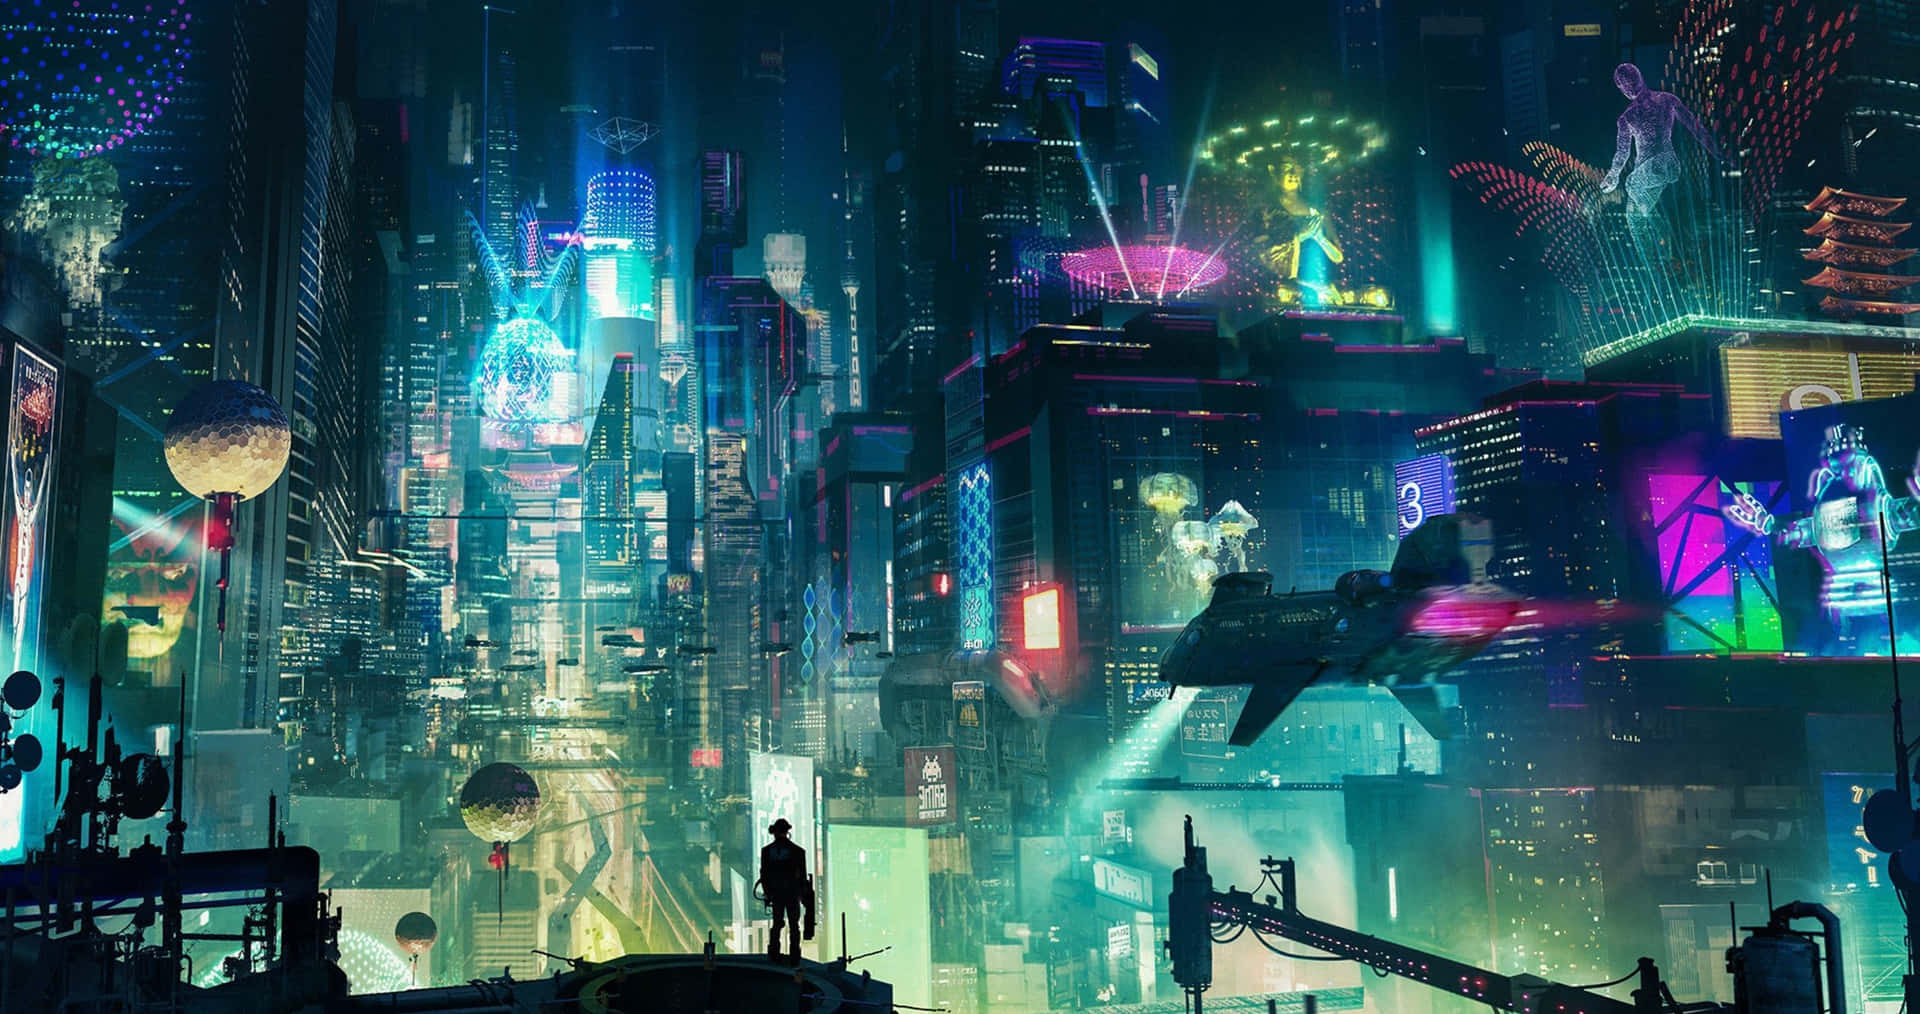 "A glimpse of the futuristic cyberpunk-style cityscape of Japan." Wallpaper